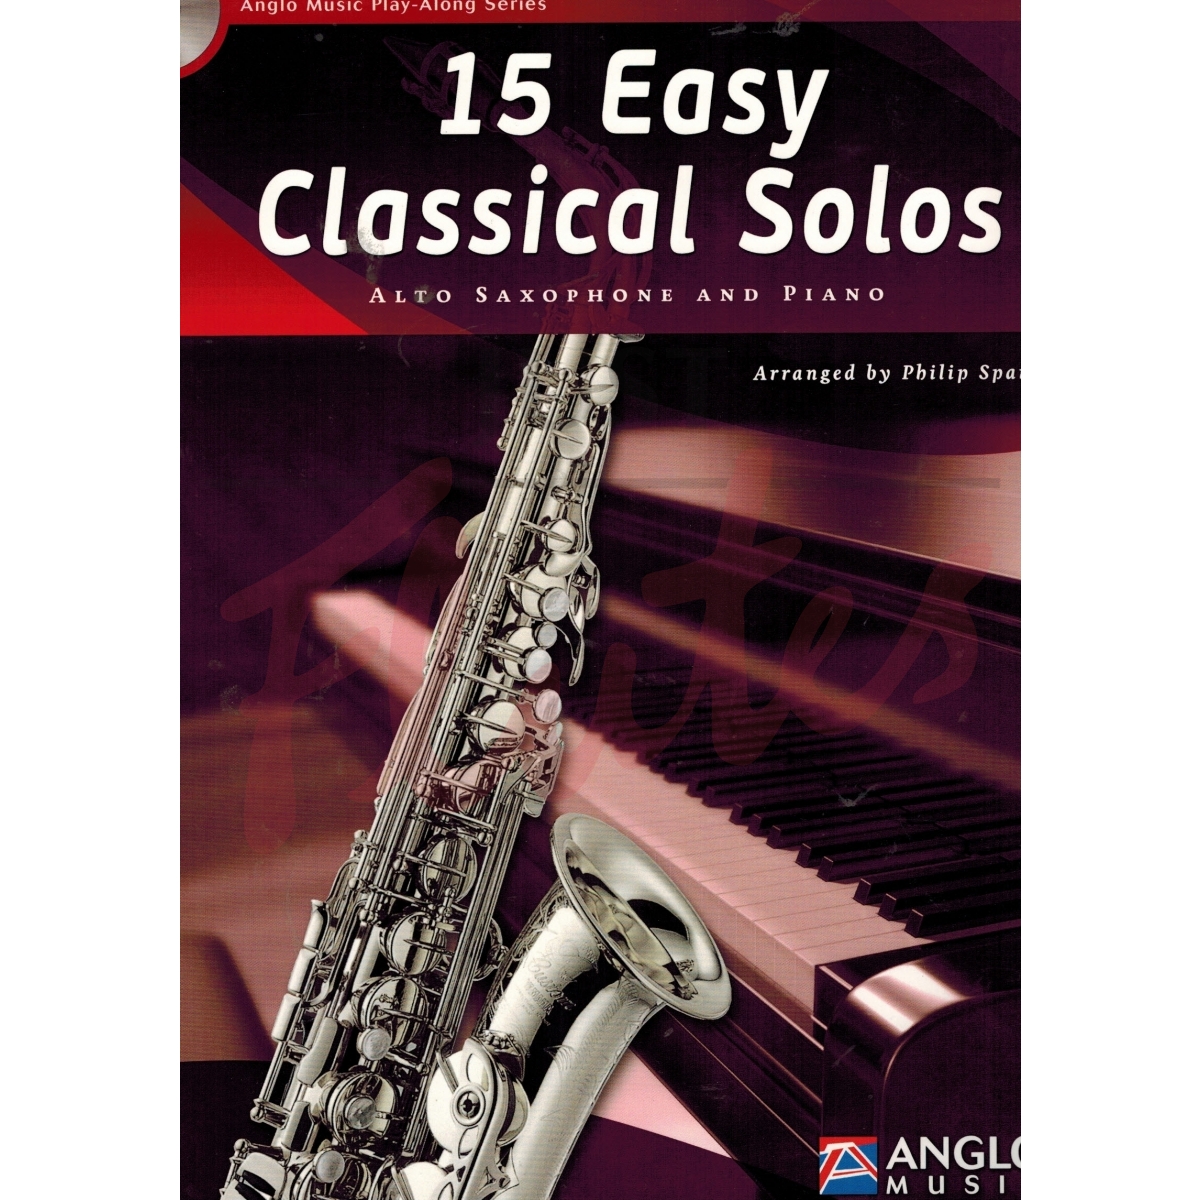 15 Easy Classical Solos [Alto Sax]